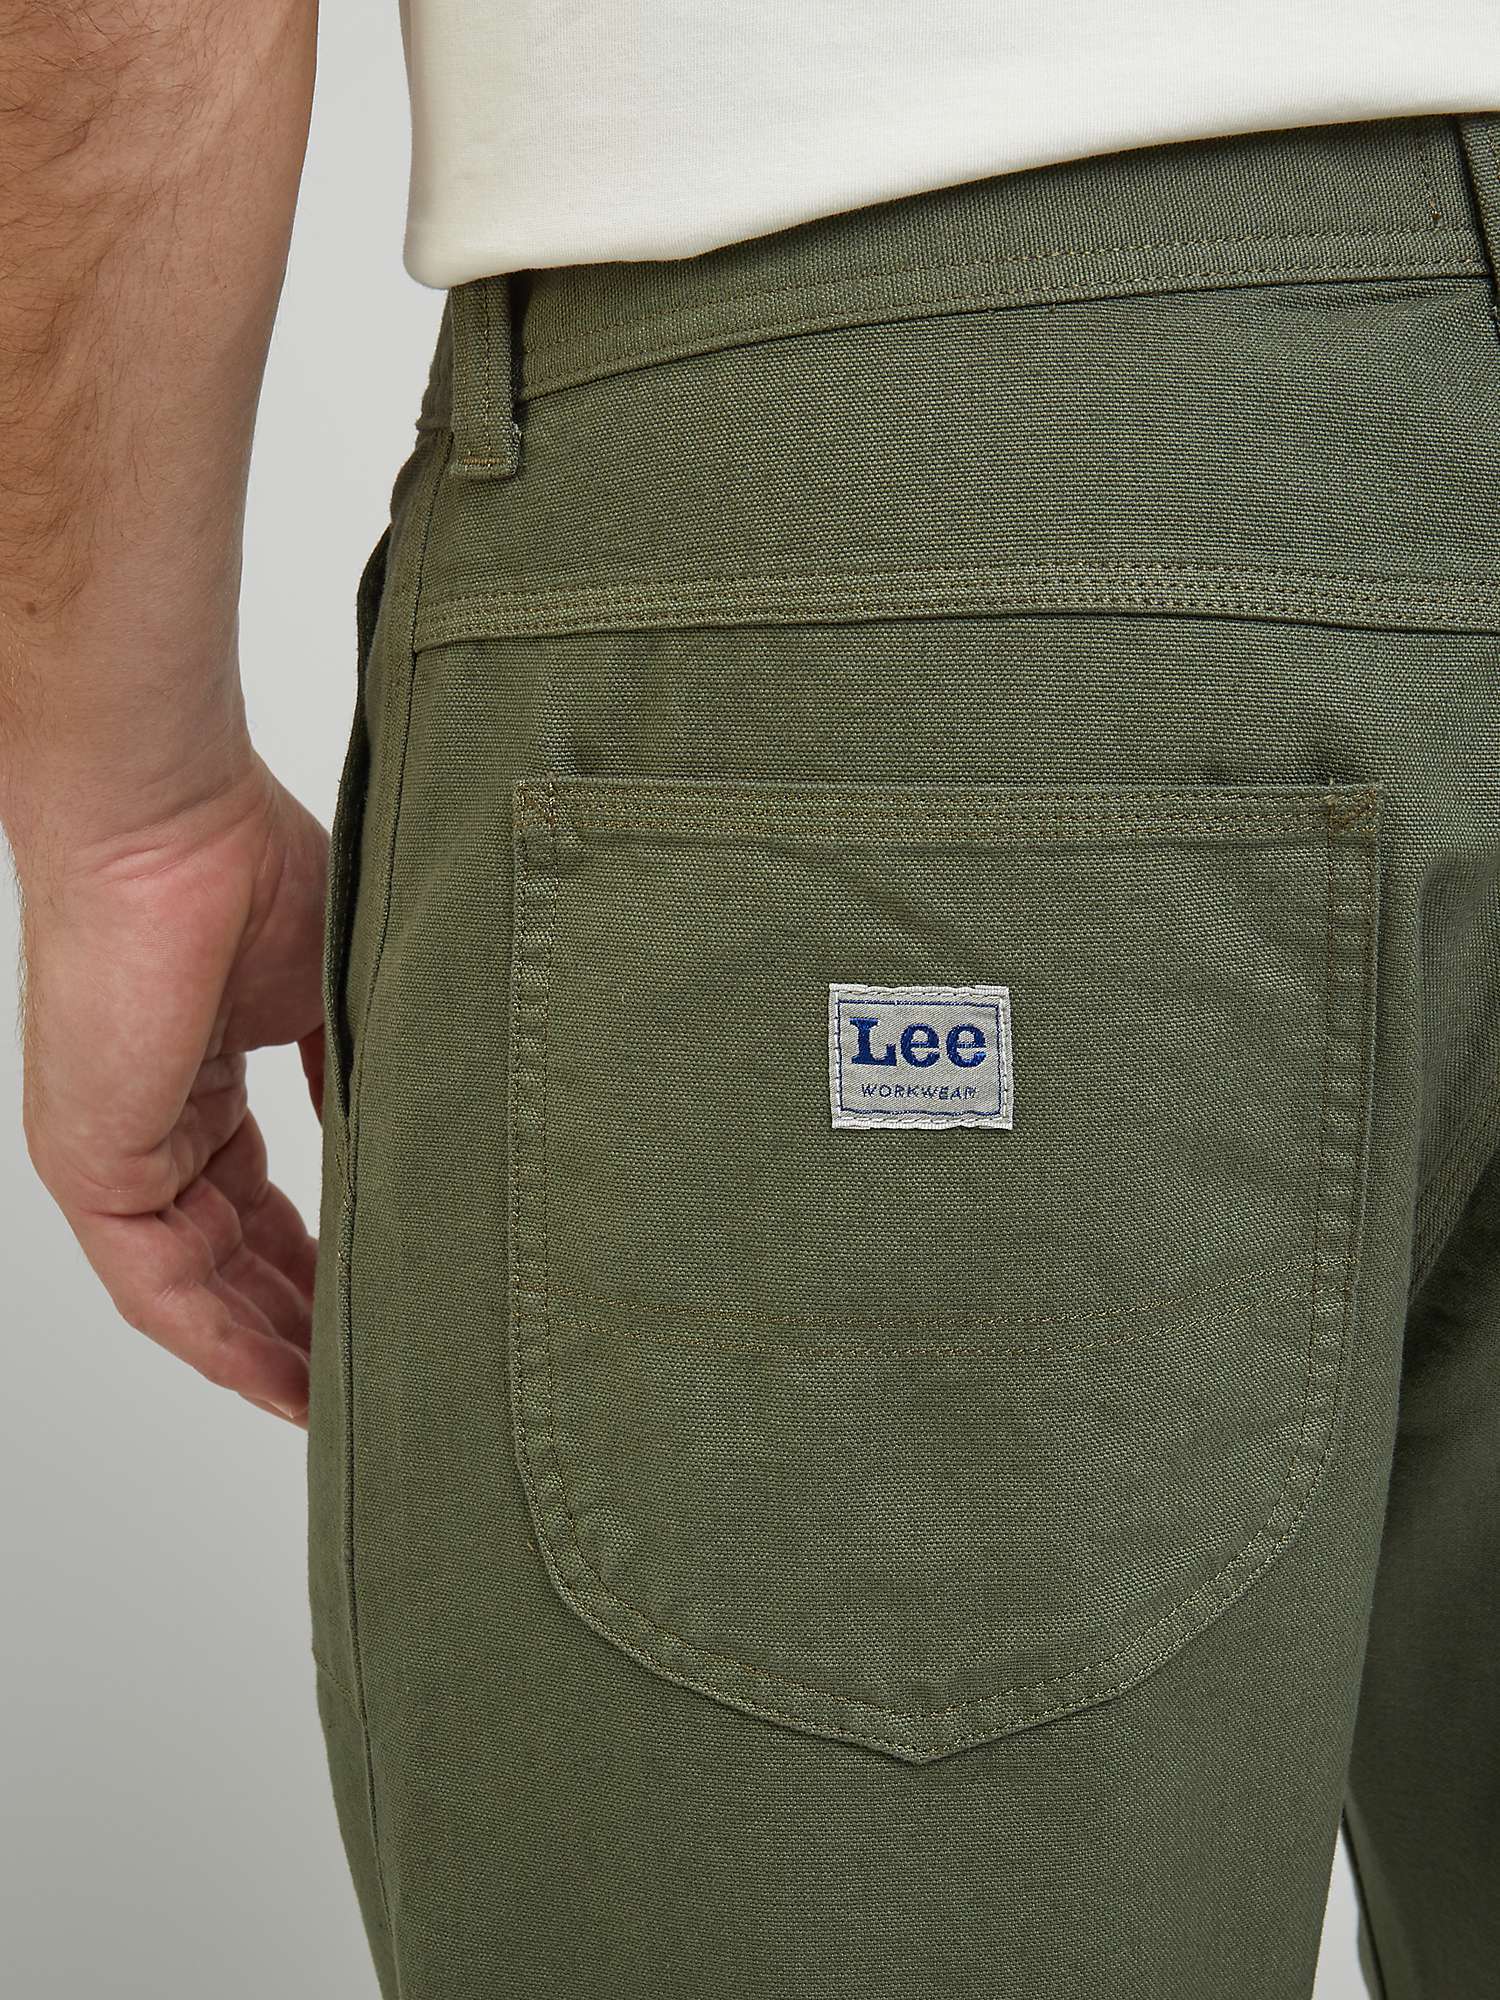 Buy Lee Cotton Blend Fatigue Pants Online at johnlewis.com